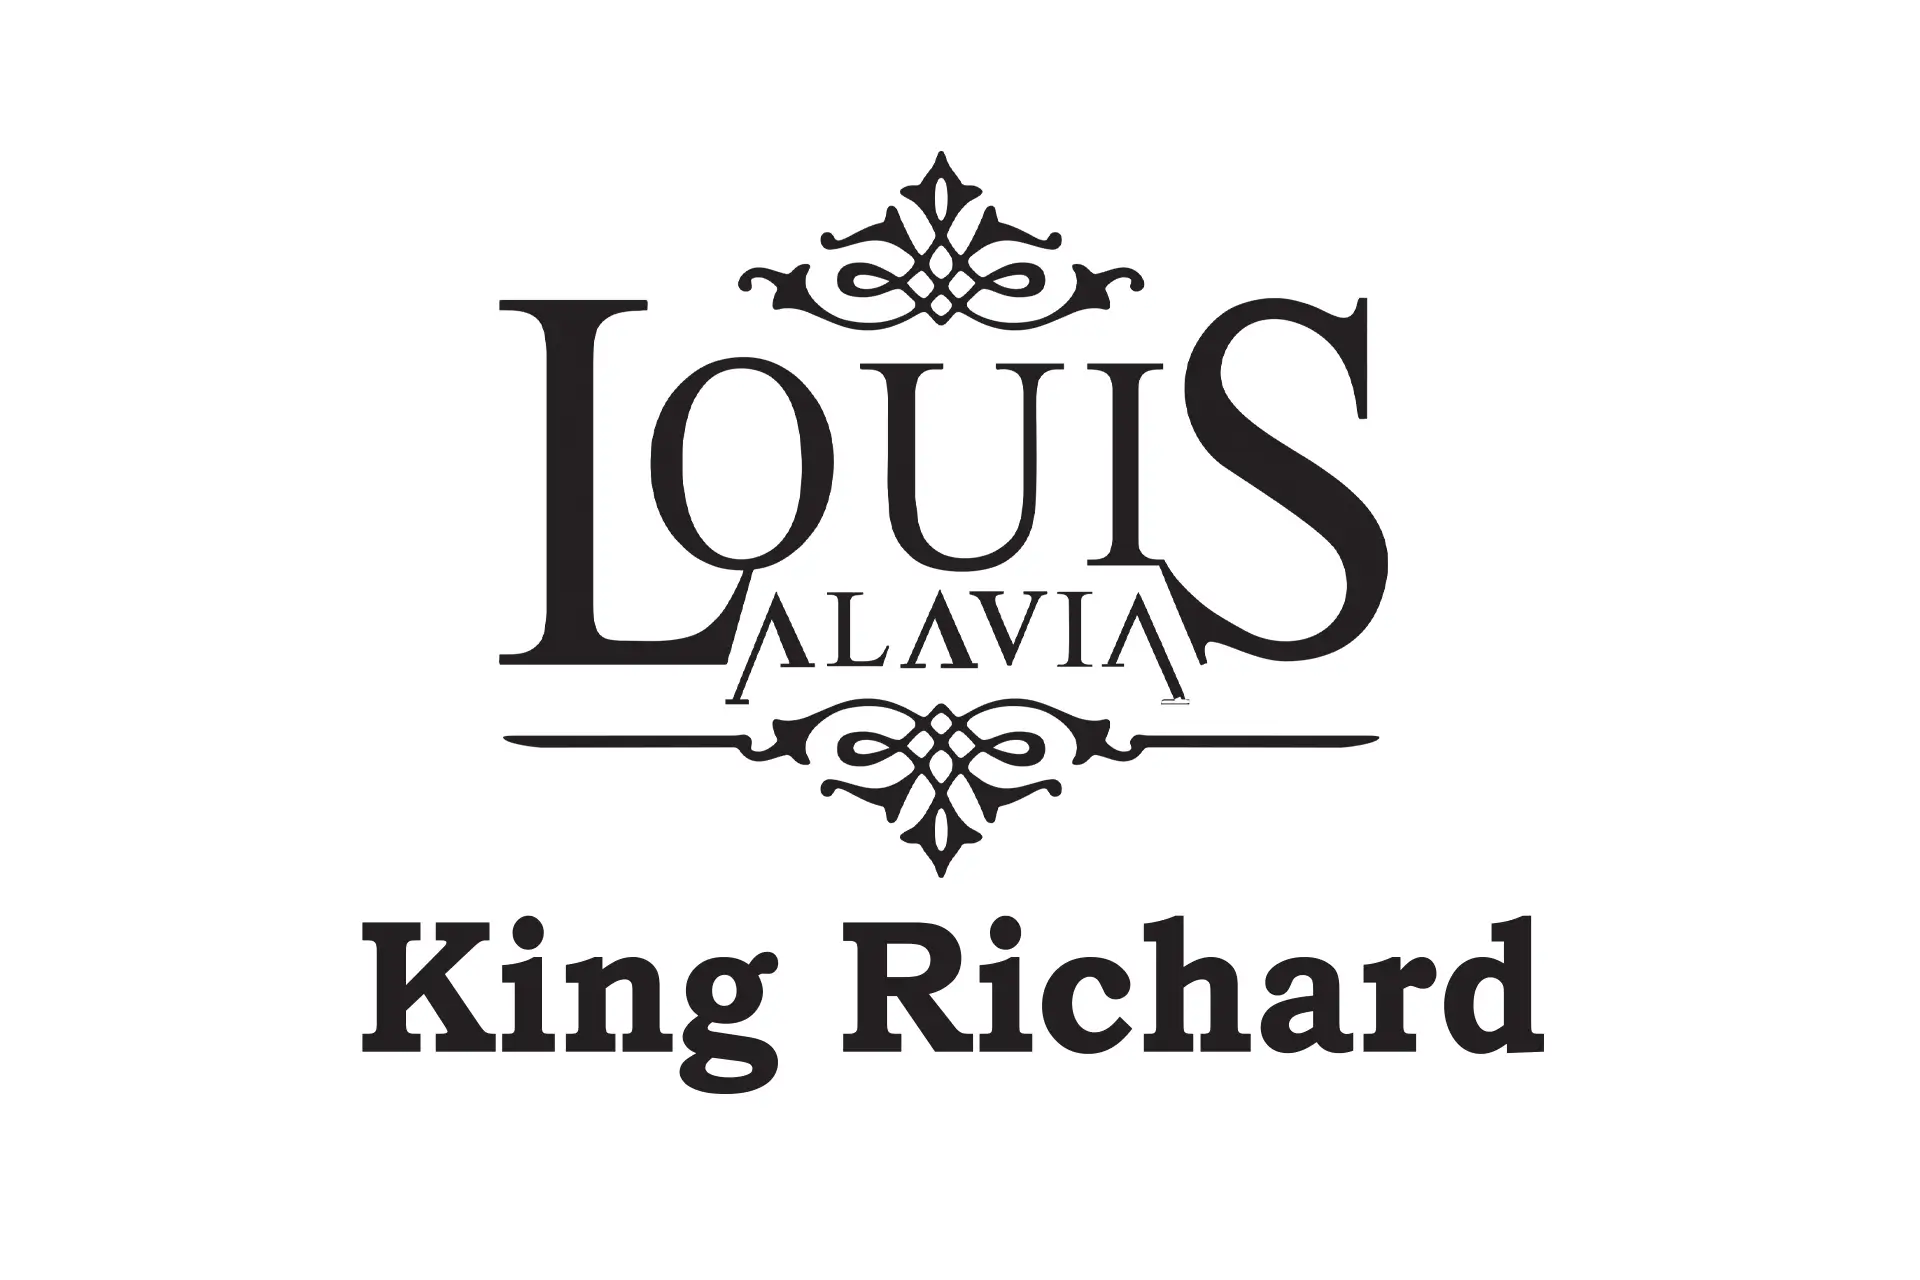 Louis alavia king richard logo